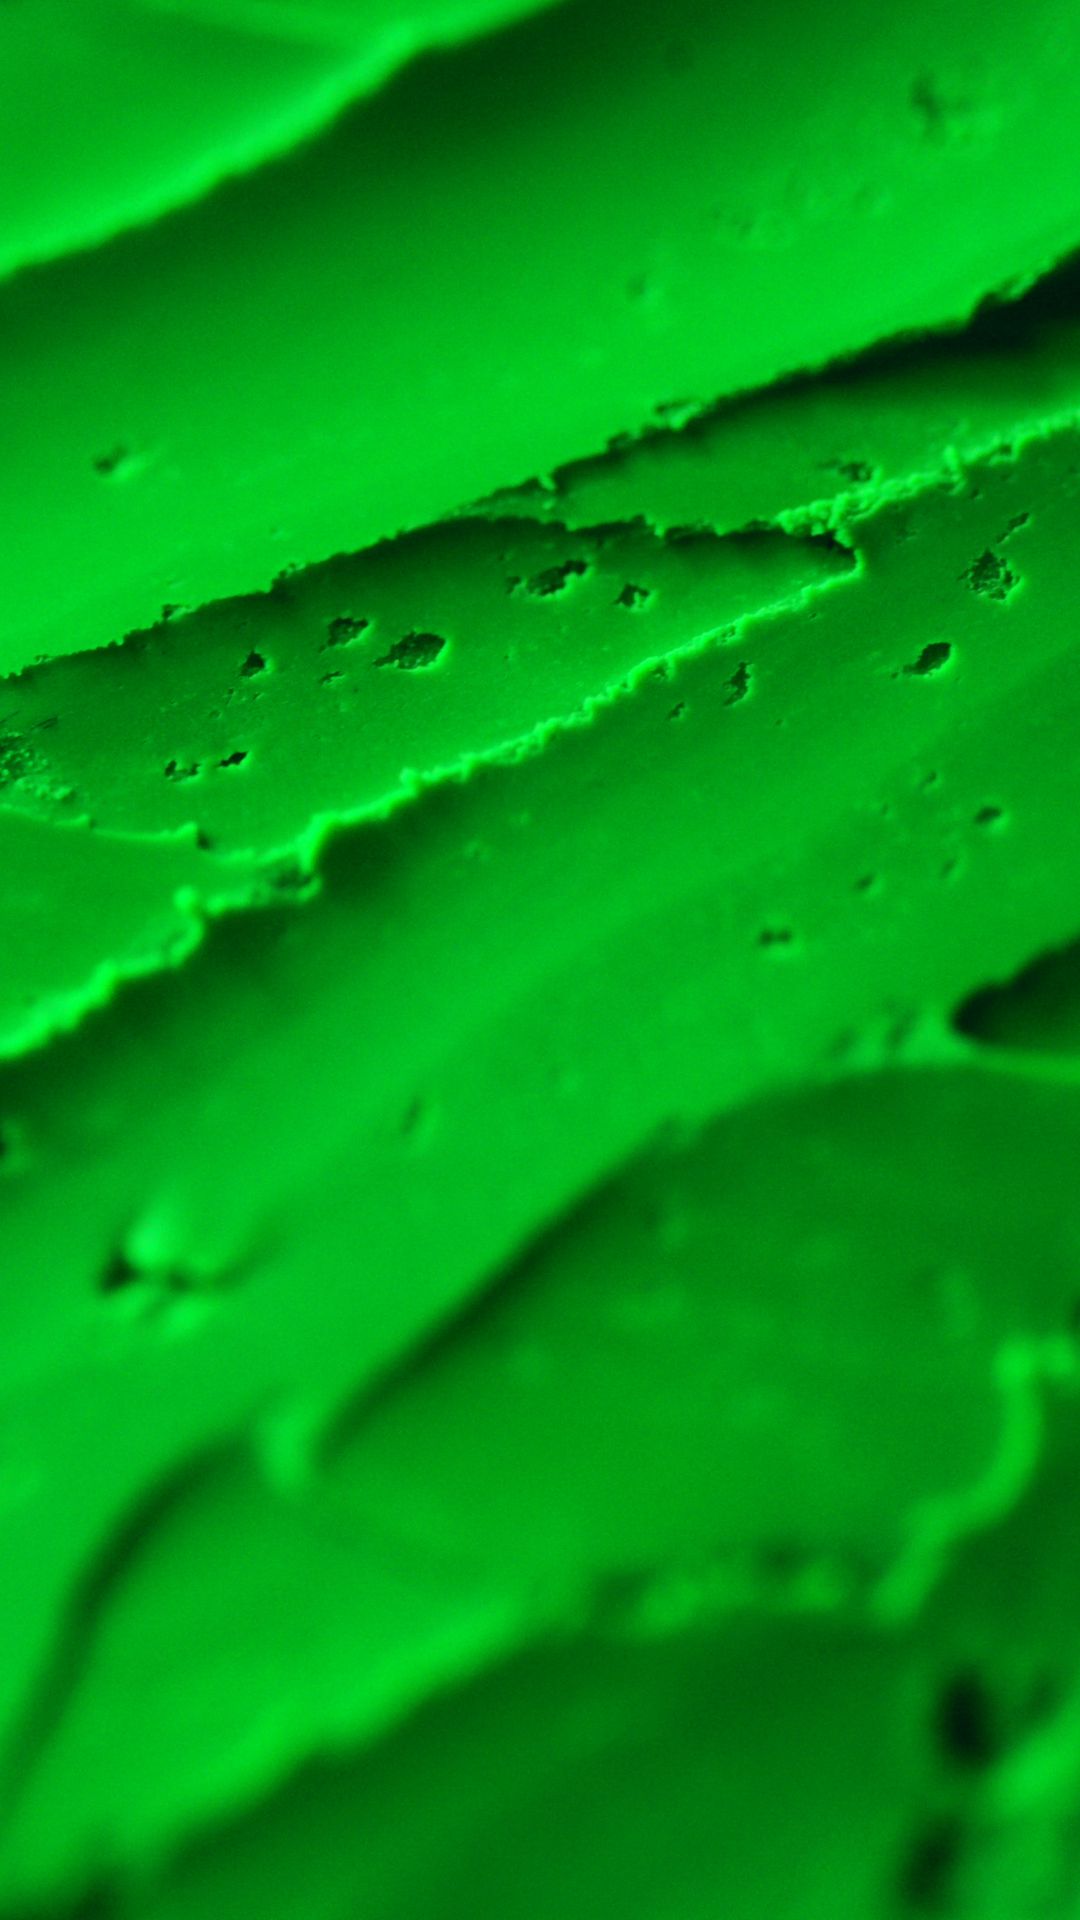 sony xperia wallpaper green